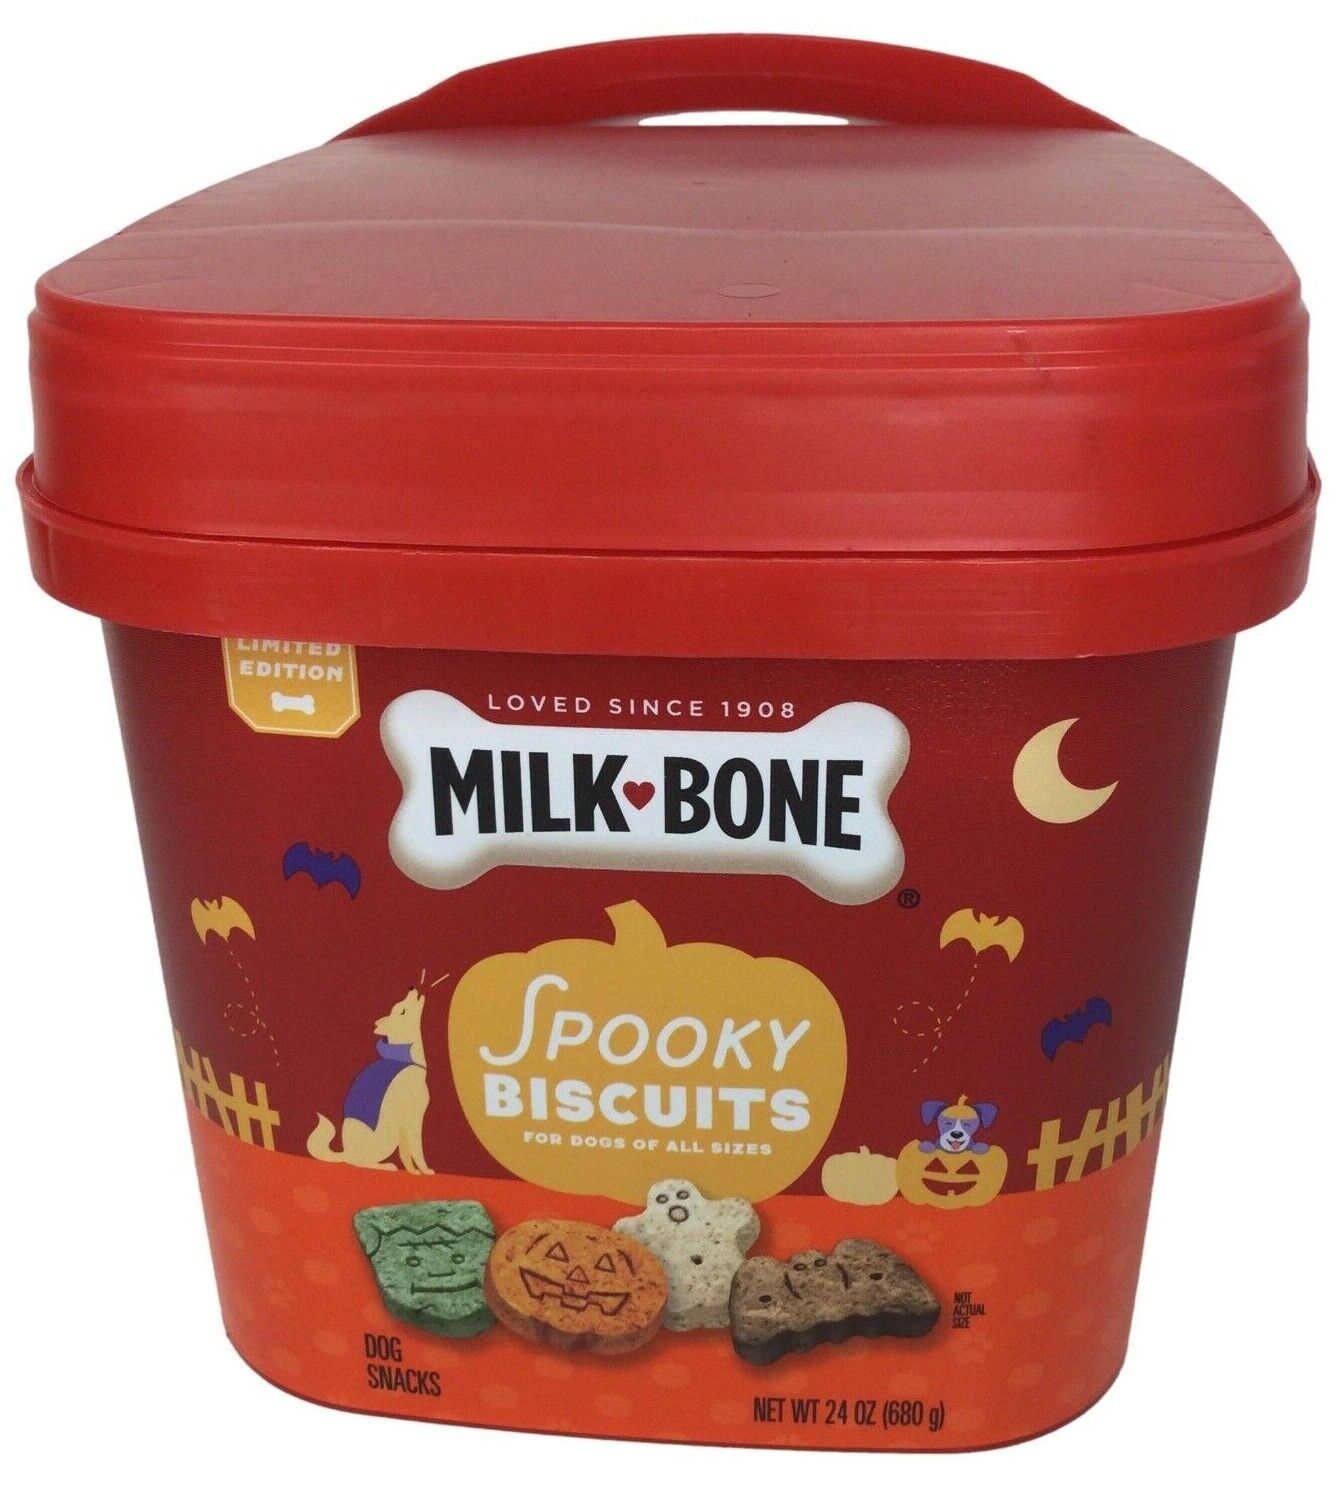 Milk-Bone Spooky Biscuits Halloween Dog Treats 24oz Pail Seaso...